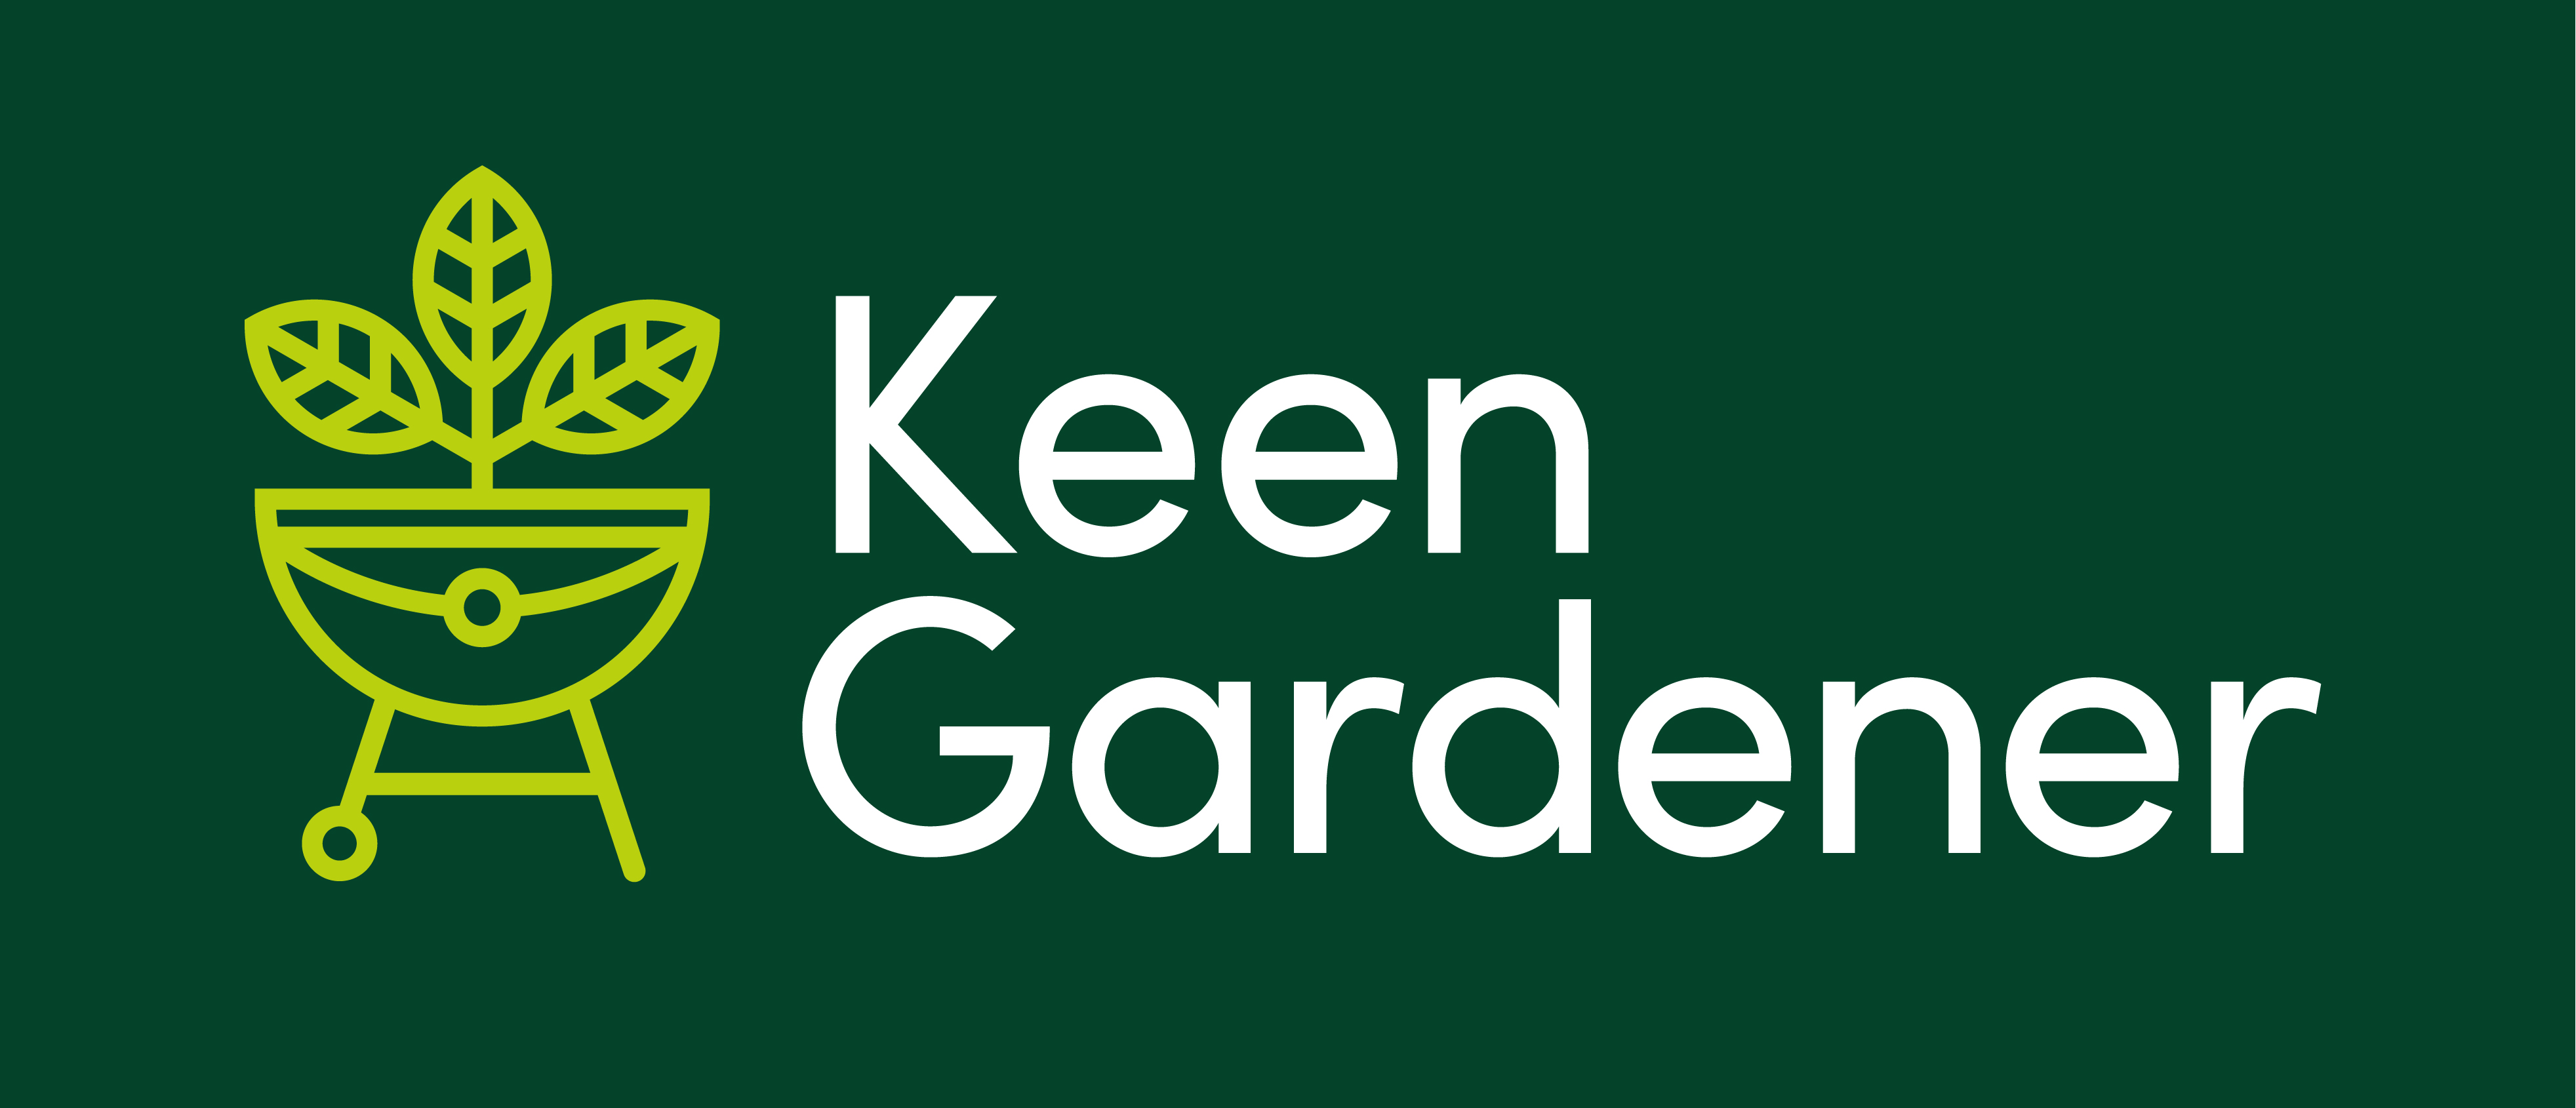 We Take Mastercard - Keen Gardener Online Garden Retailer of Barbecues, Garden Furniture & Garden Equipment